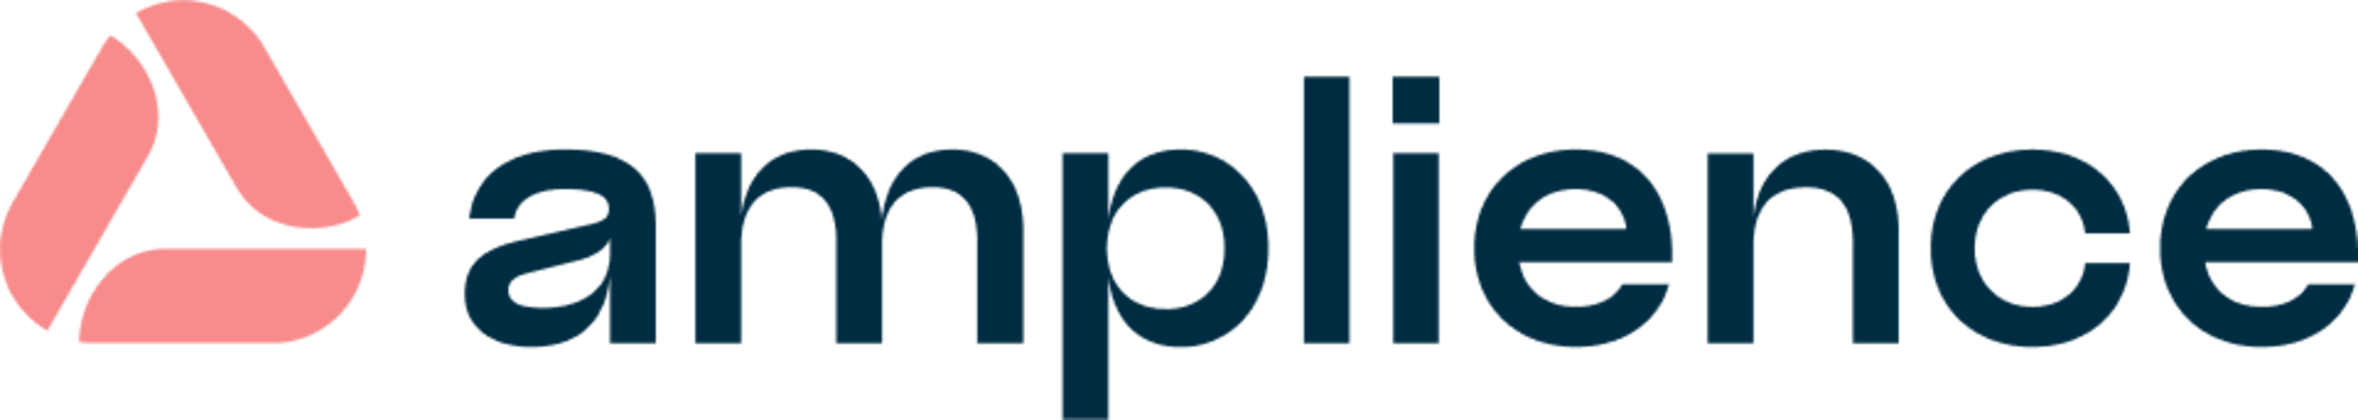 Amplience logo.